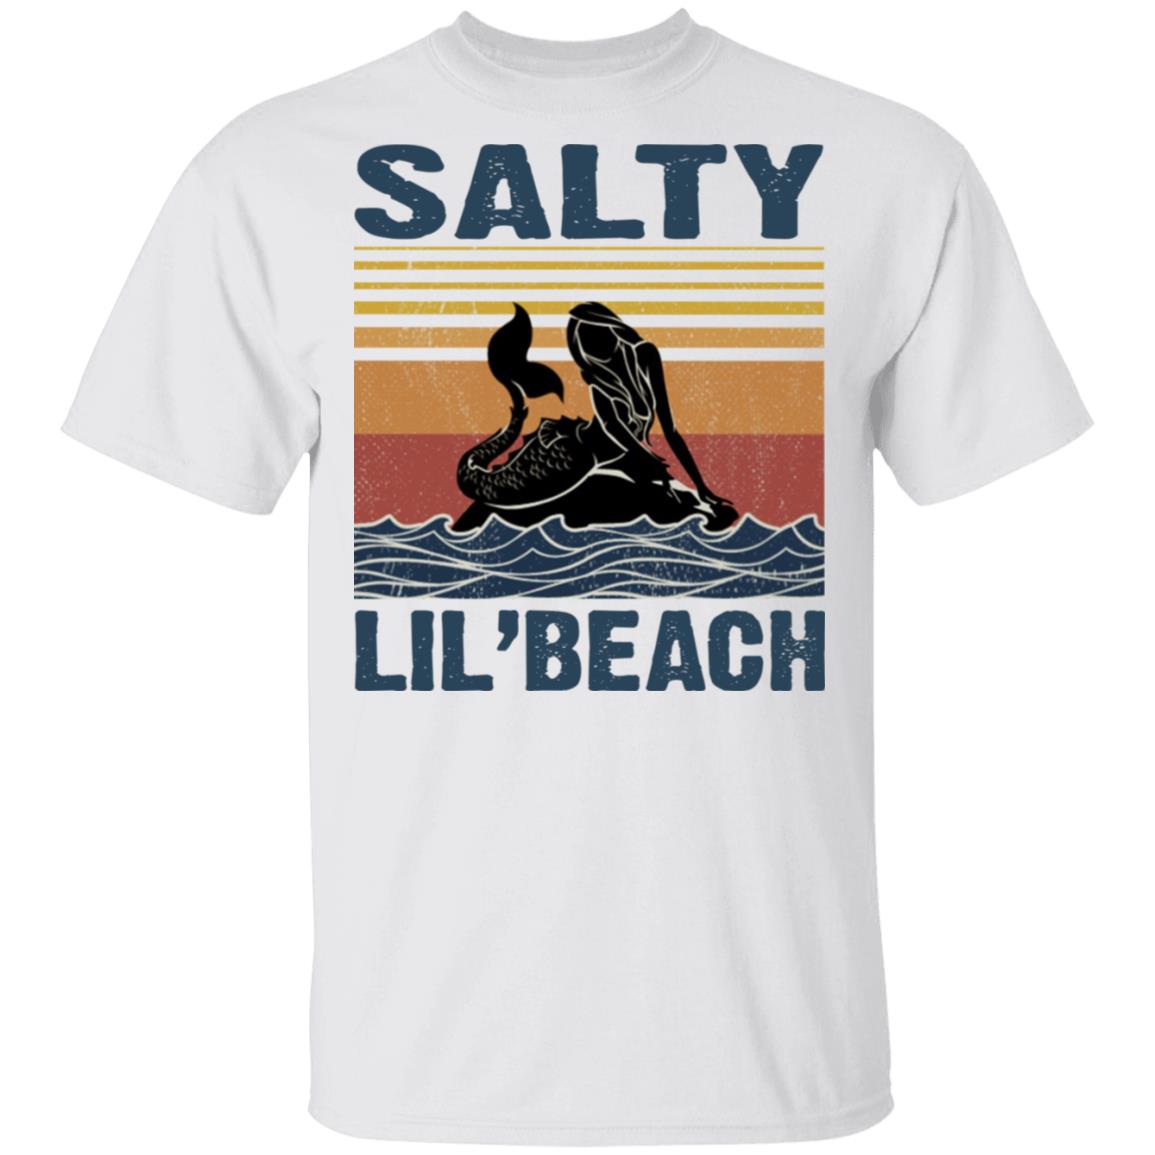 Salty Lil' Beach Shirt